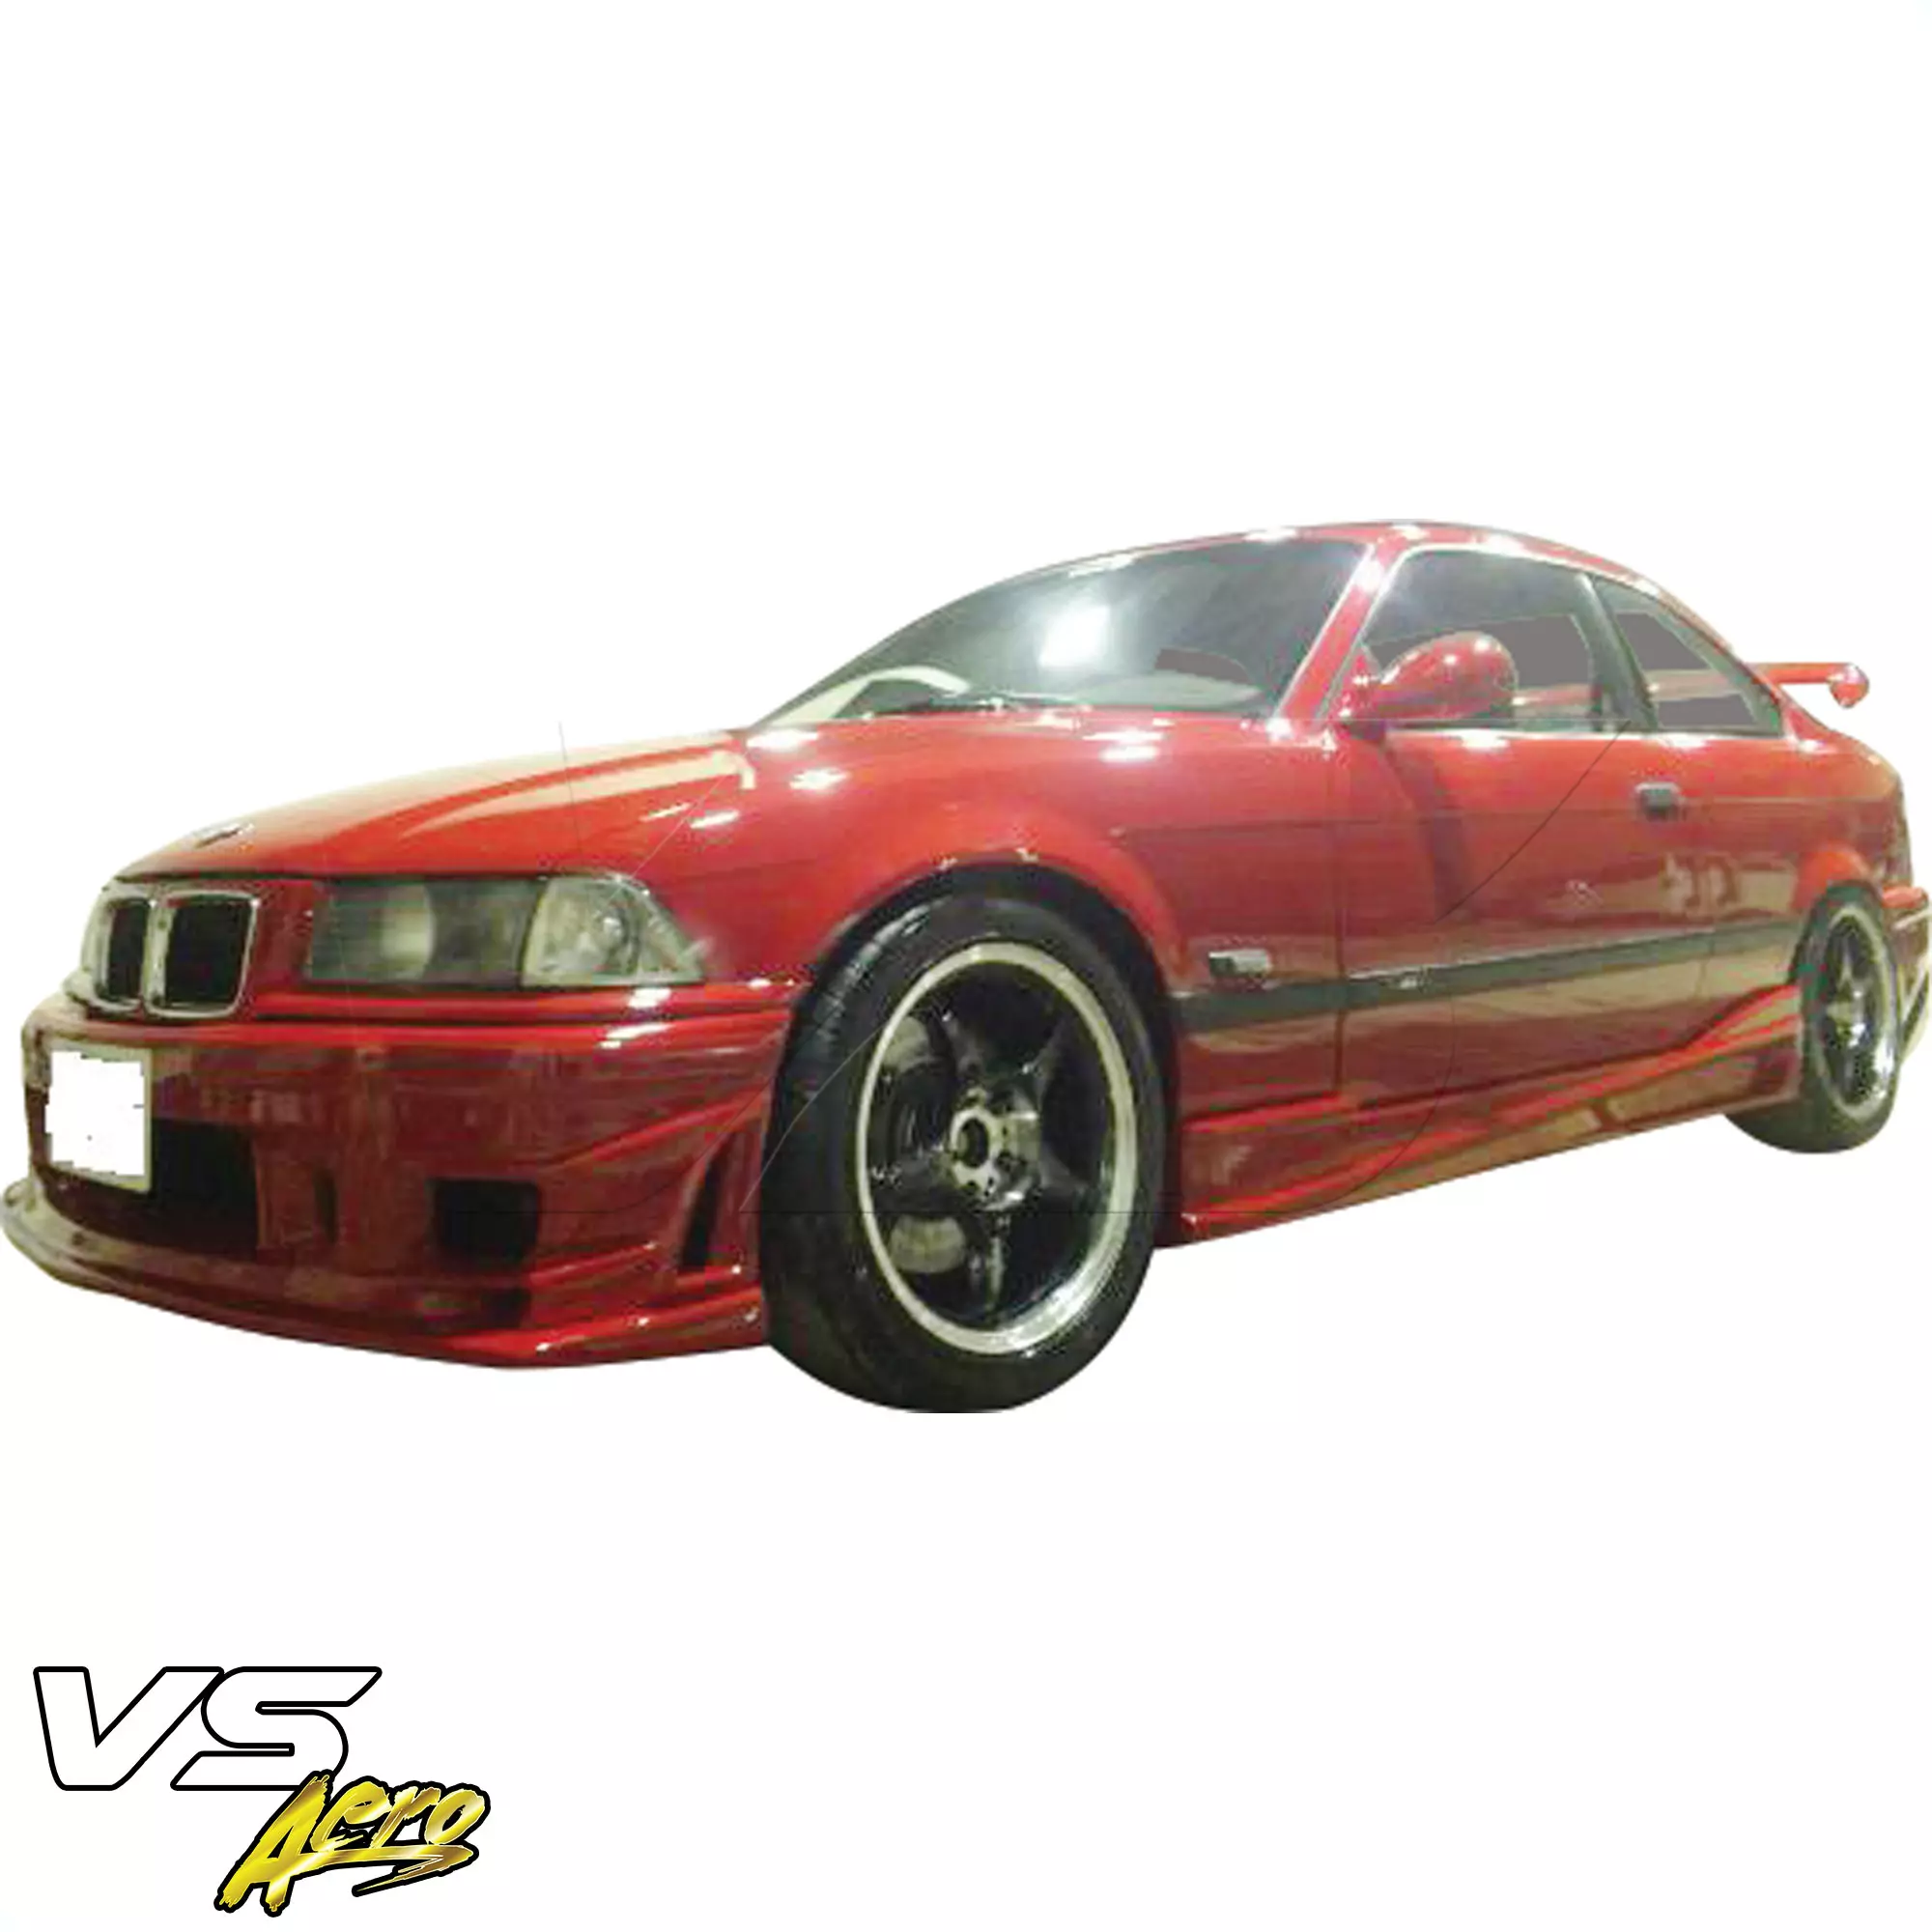 VSaero FRP BOME Body Kit 4pc > BMW 3-Series 325i 328i E36 1992-1998 > 2dr Coupe - Image 5